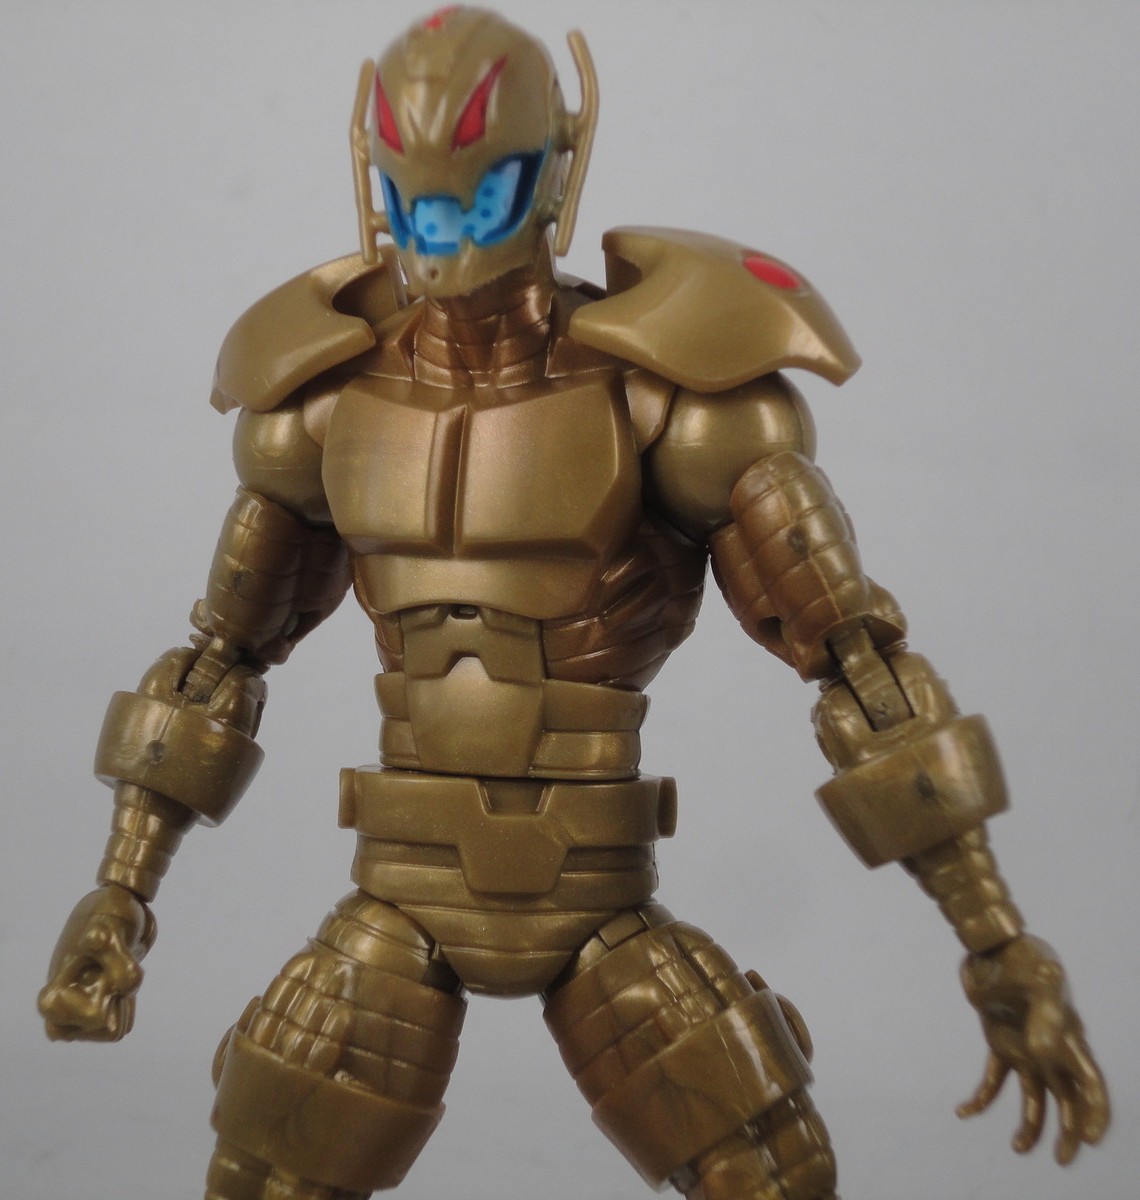 Iron Man 3 Marvel Legends Gold Age of Ultron Figure